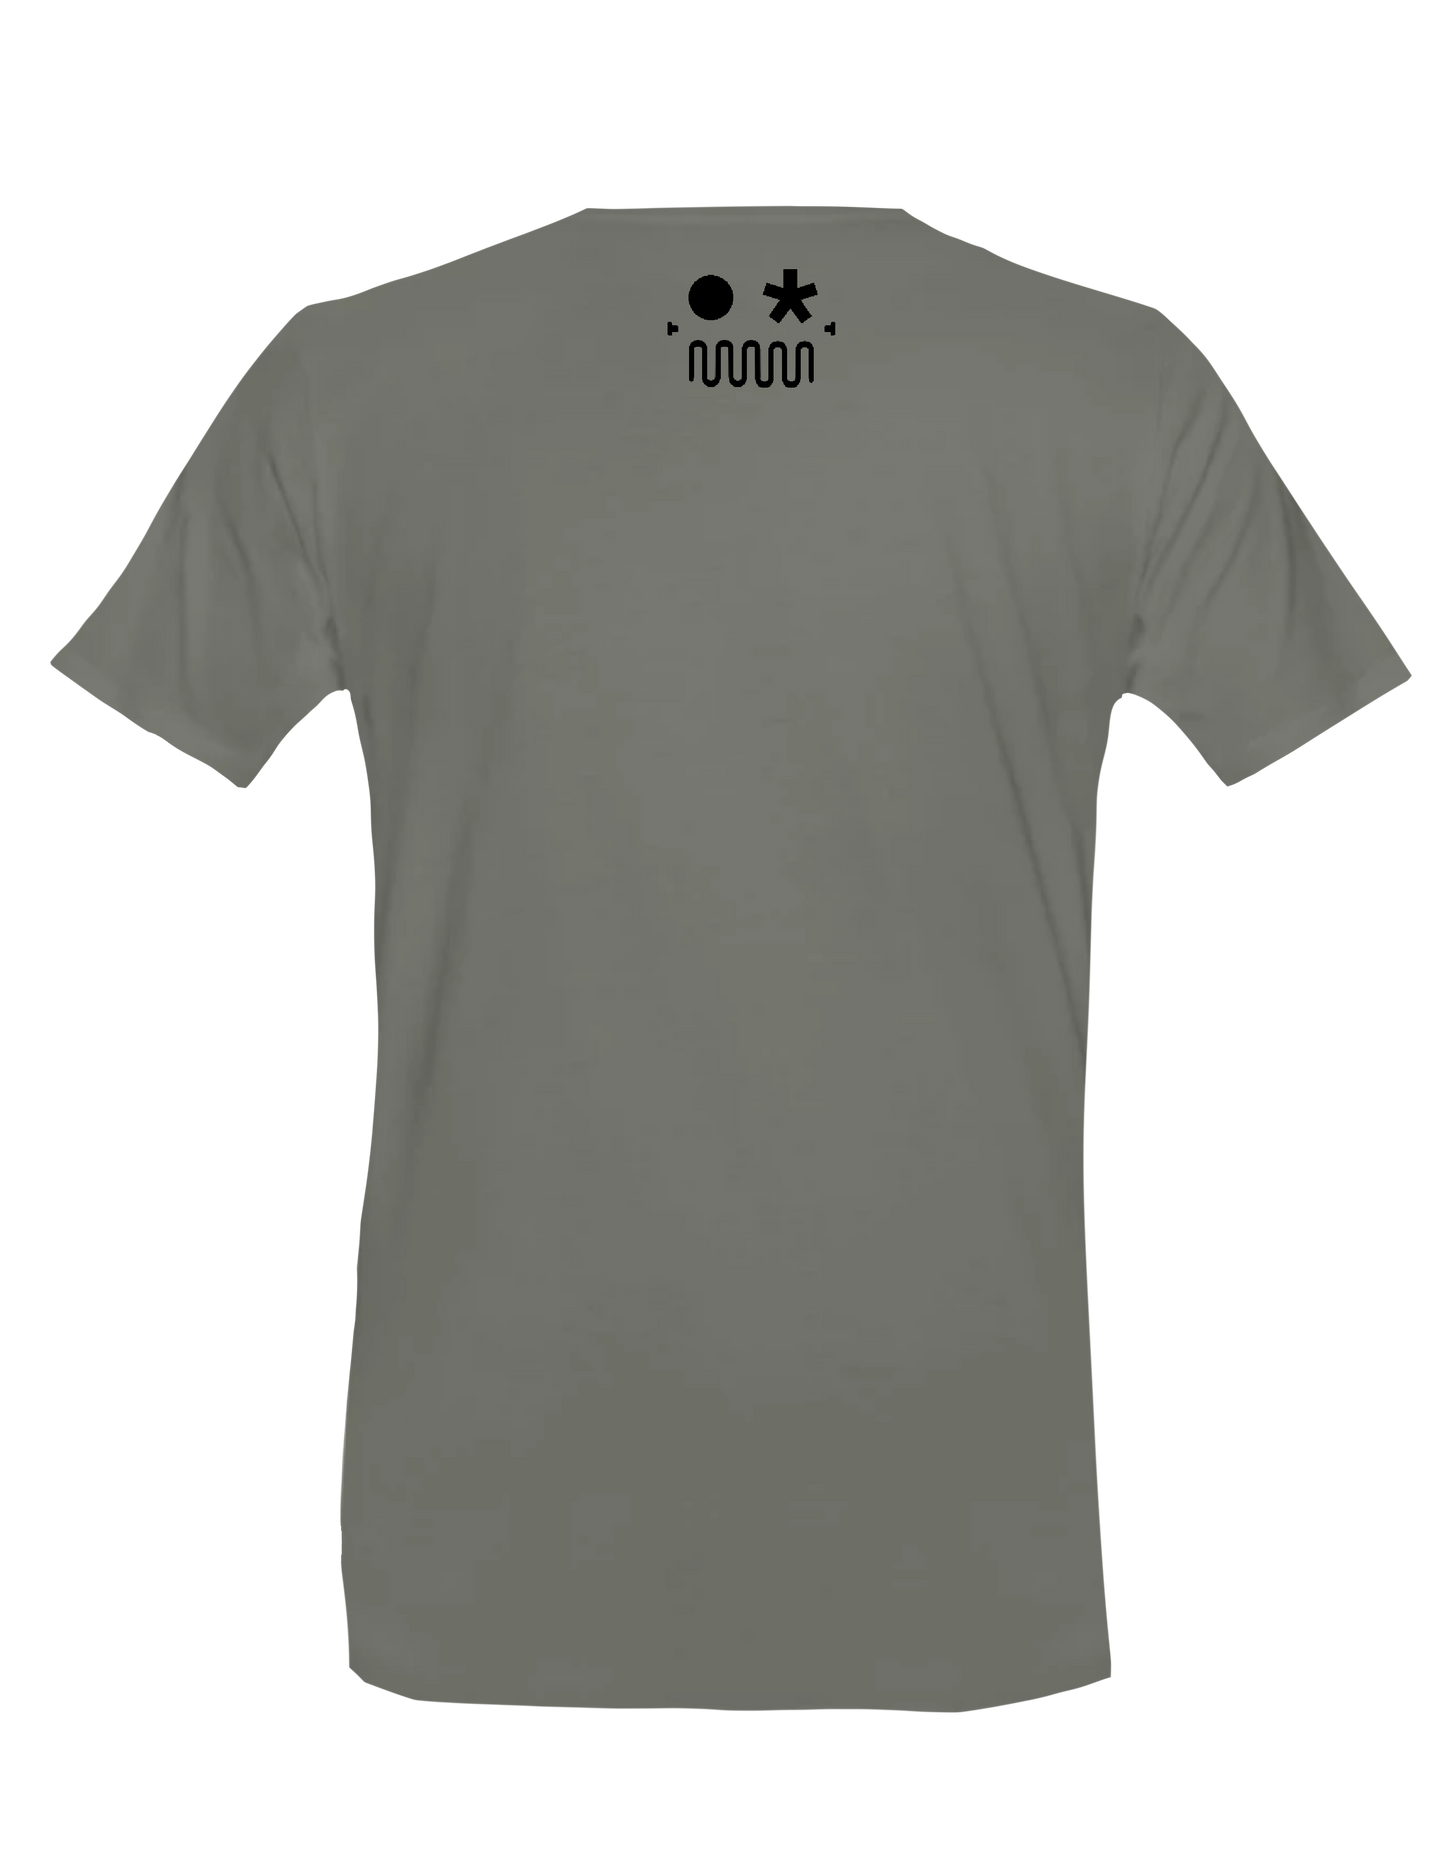 KENDRICK LAMAR - MR. MORALE* (Asphalt Grey) - T-Shirt by BOYSDONTDRAW